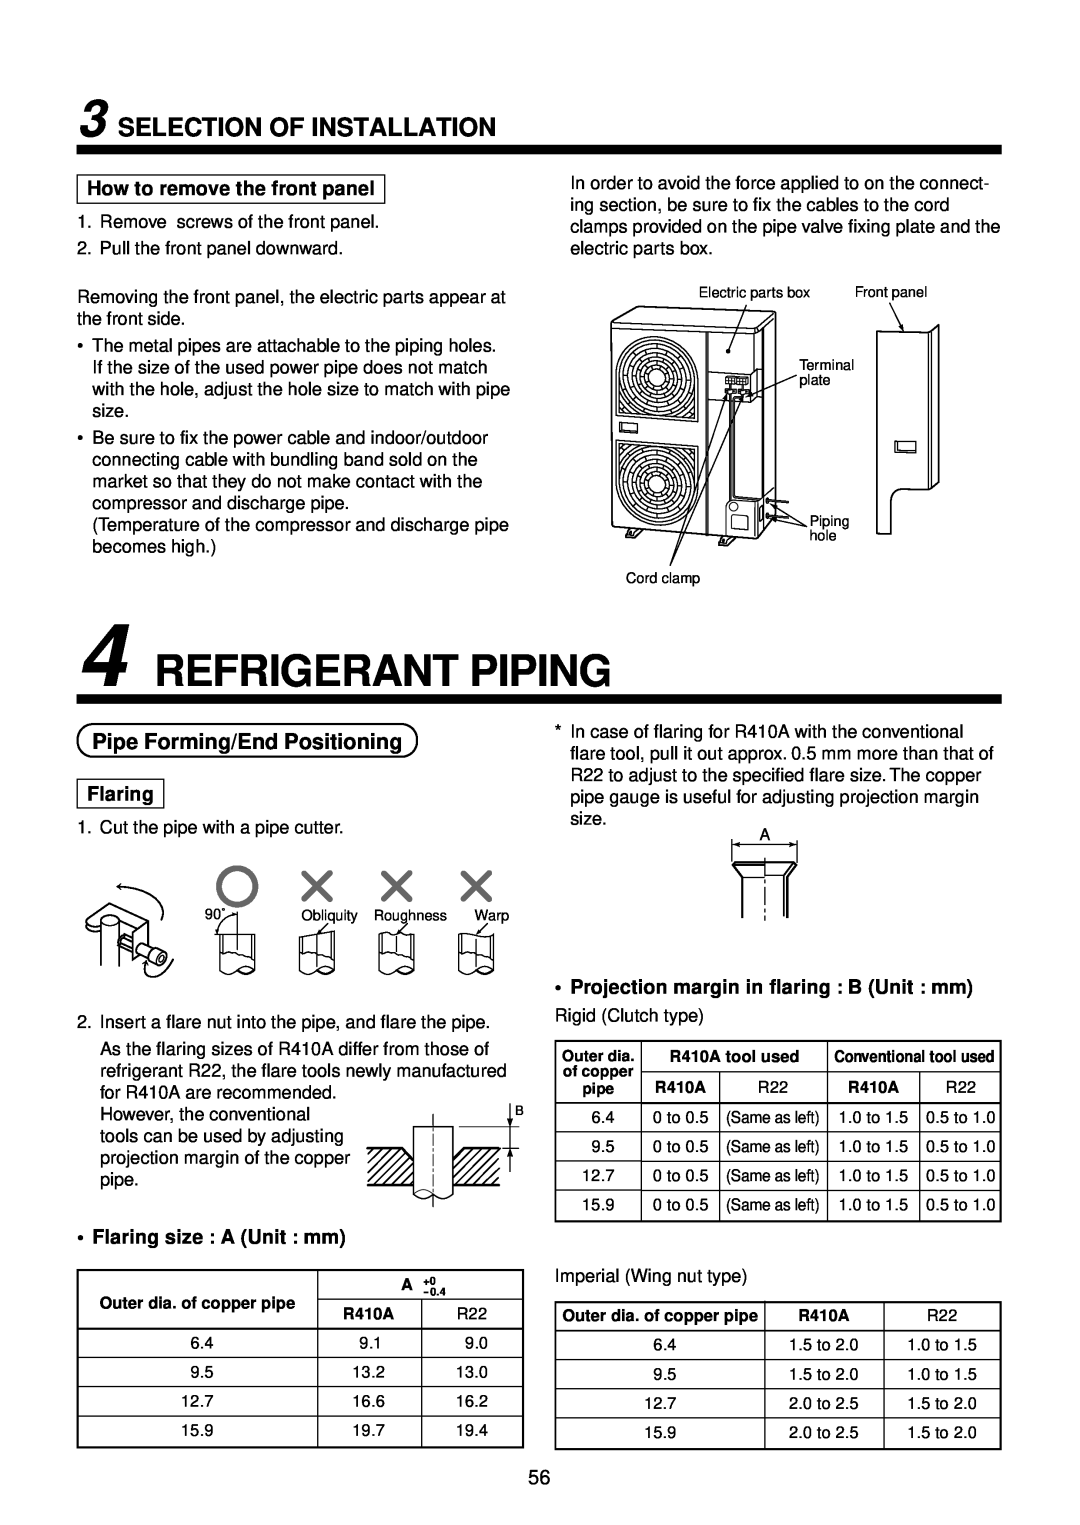 Toshiba RAV-SP1100UT-E, RAV-SP560AT-E Refrigerant Piping, Selection Of Installation, Pipe Forming/End Positioning, Flaring 